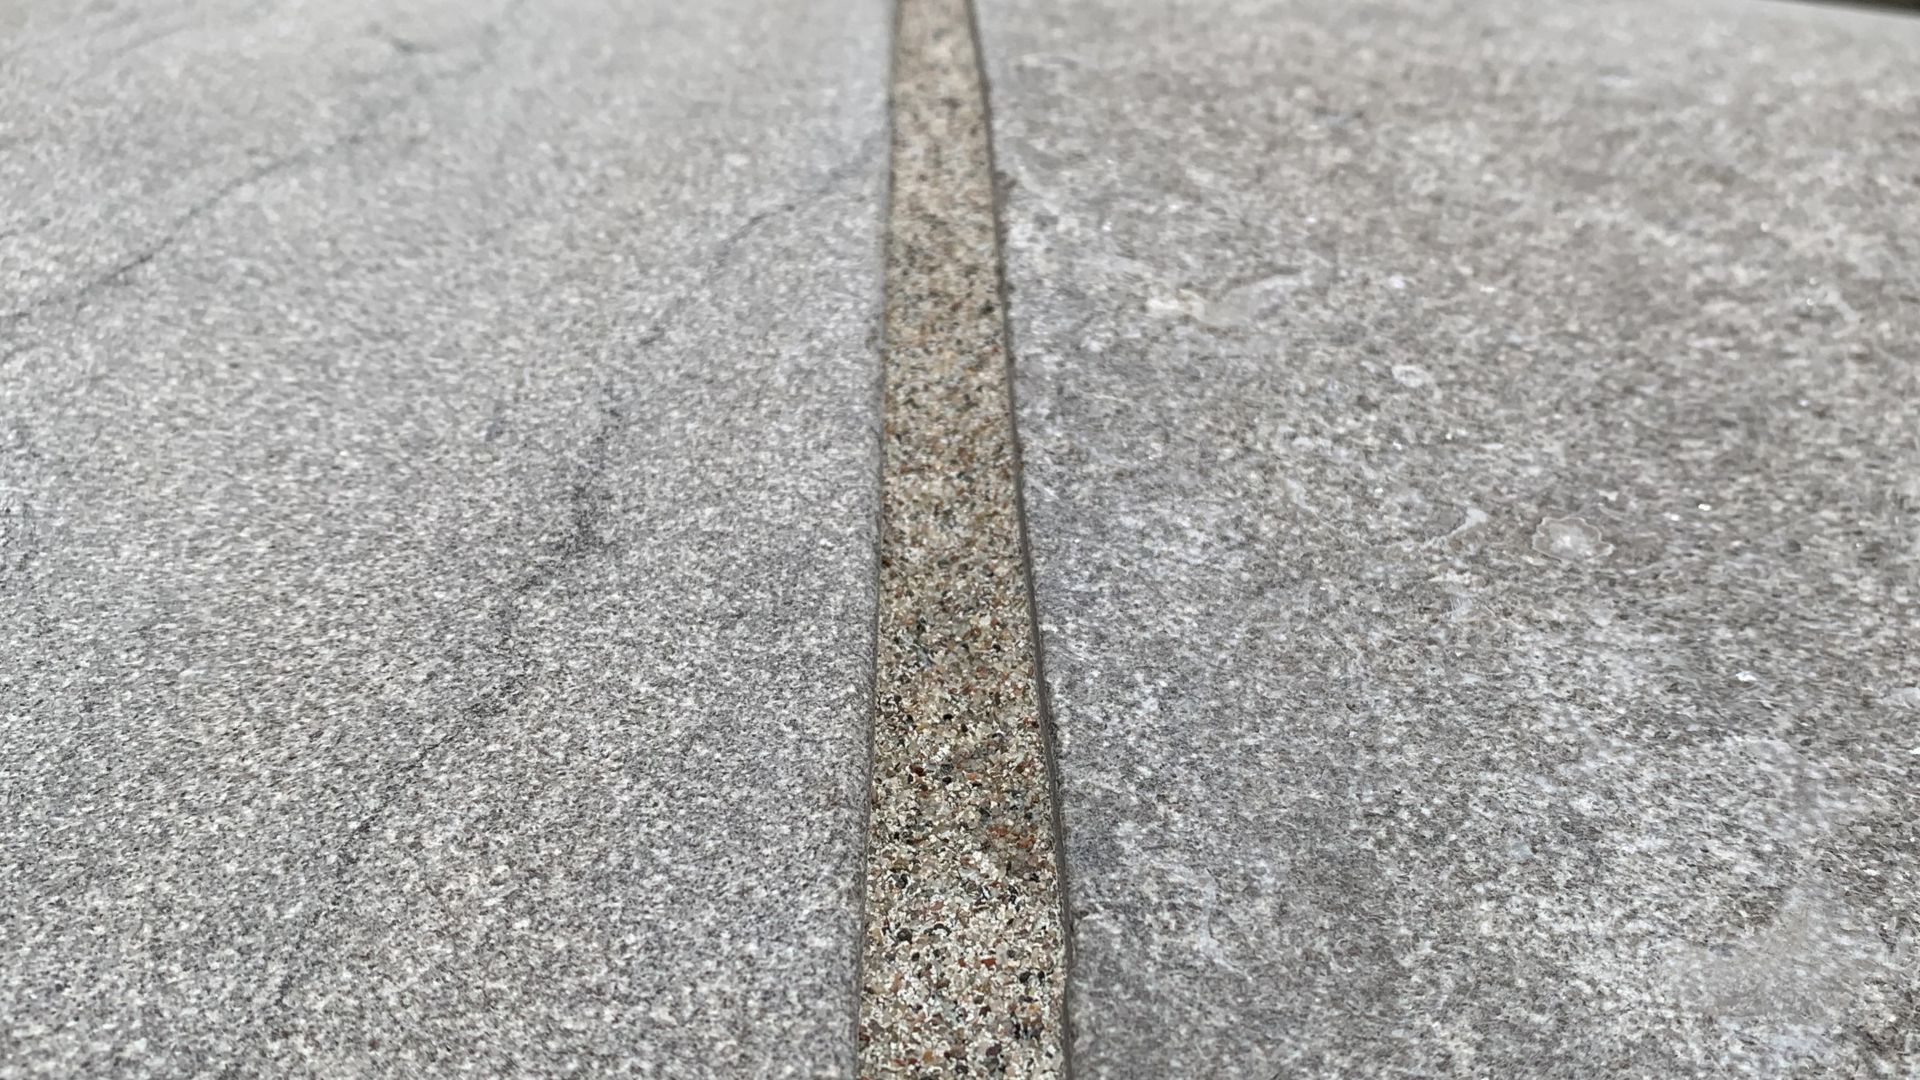 Concrete Isolation Joints